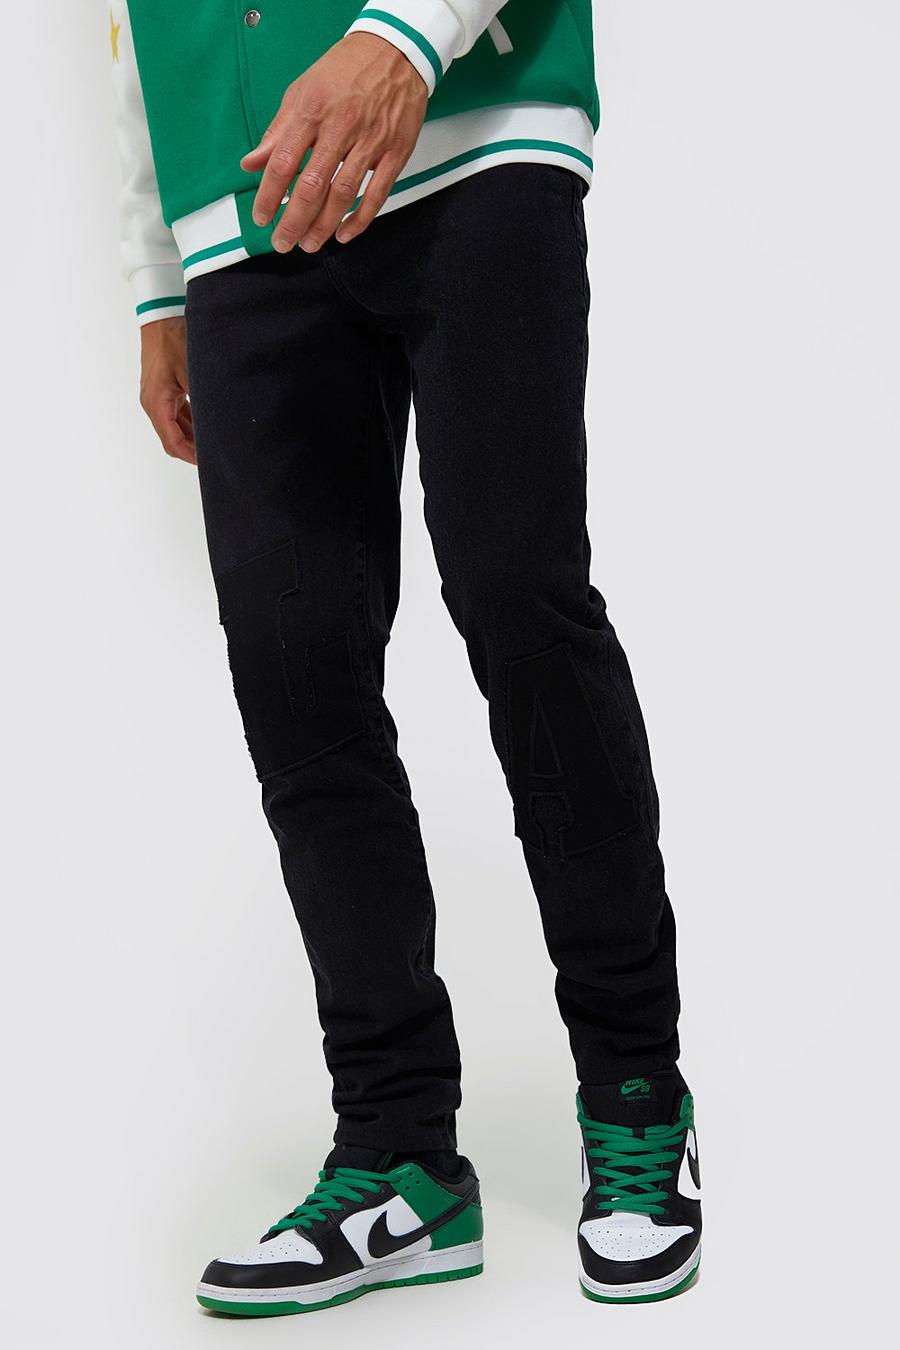 Washed black ג'ינס מבד קשיח בגזרה צרה עם אפליקציית LA בסגנון נבחרת ספורט, לגברים גבוהים image number 1